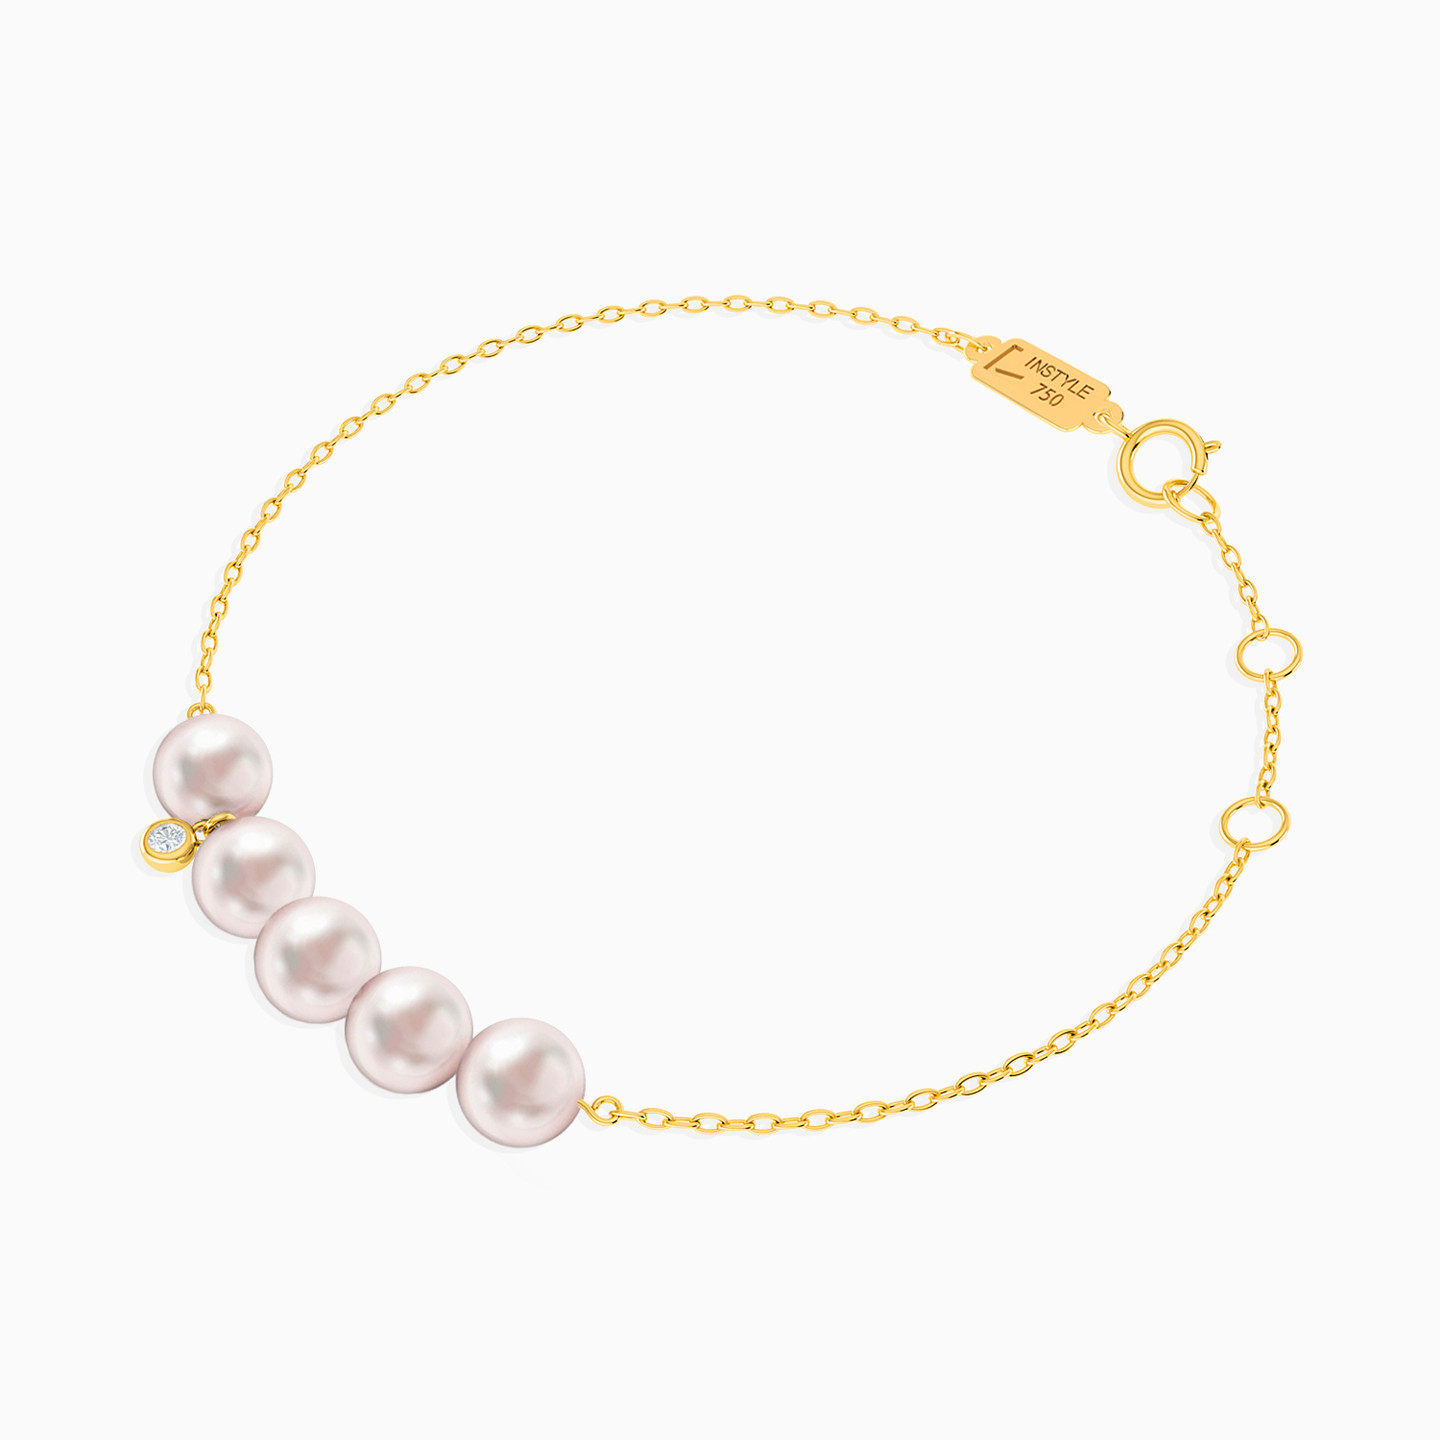 18K Gold Diamods & Pearls Chain Bracelet - 2